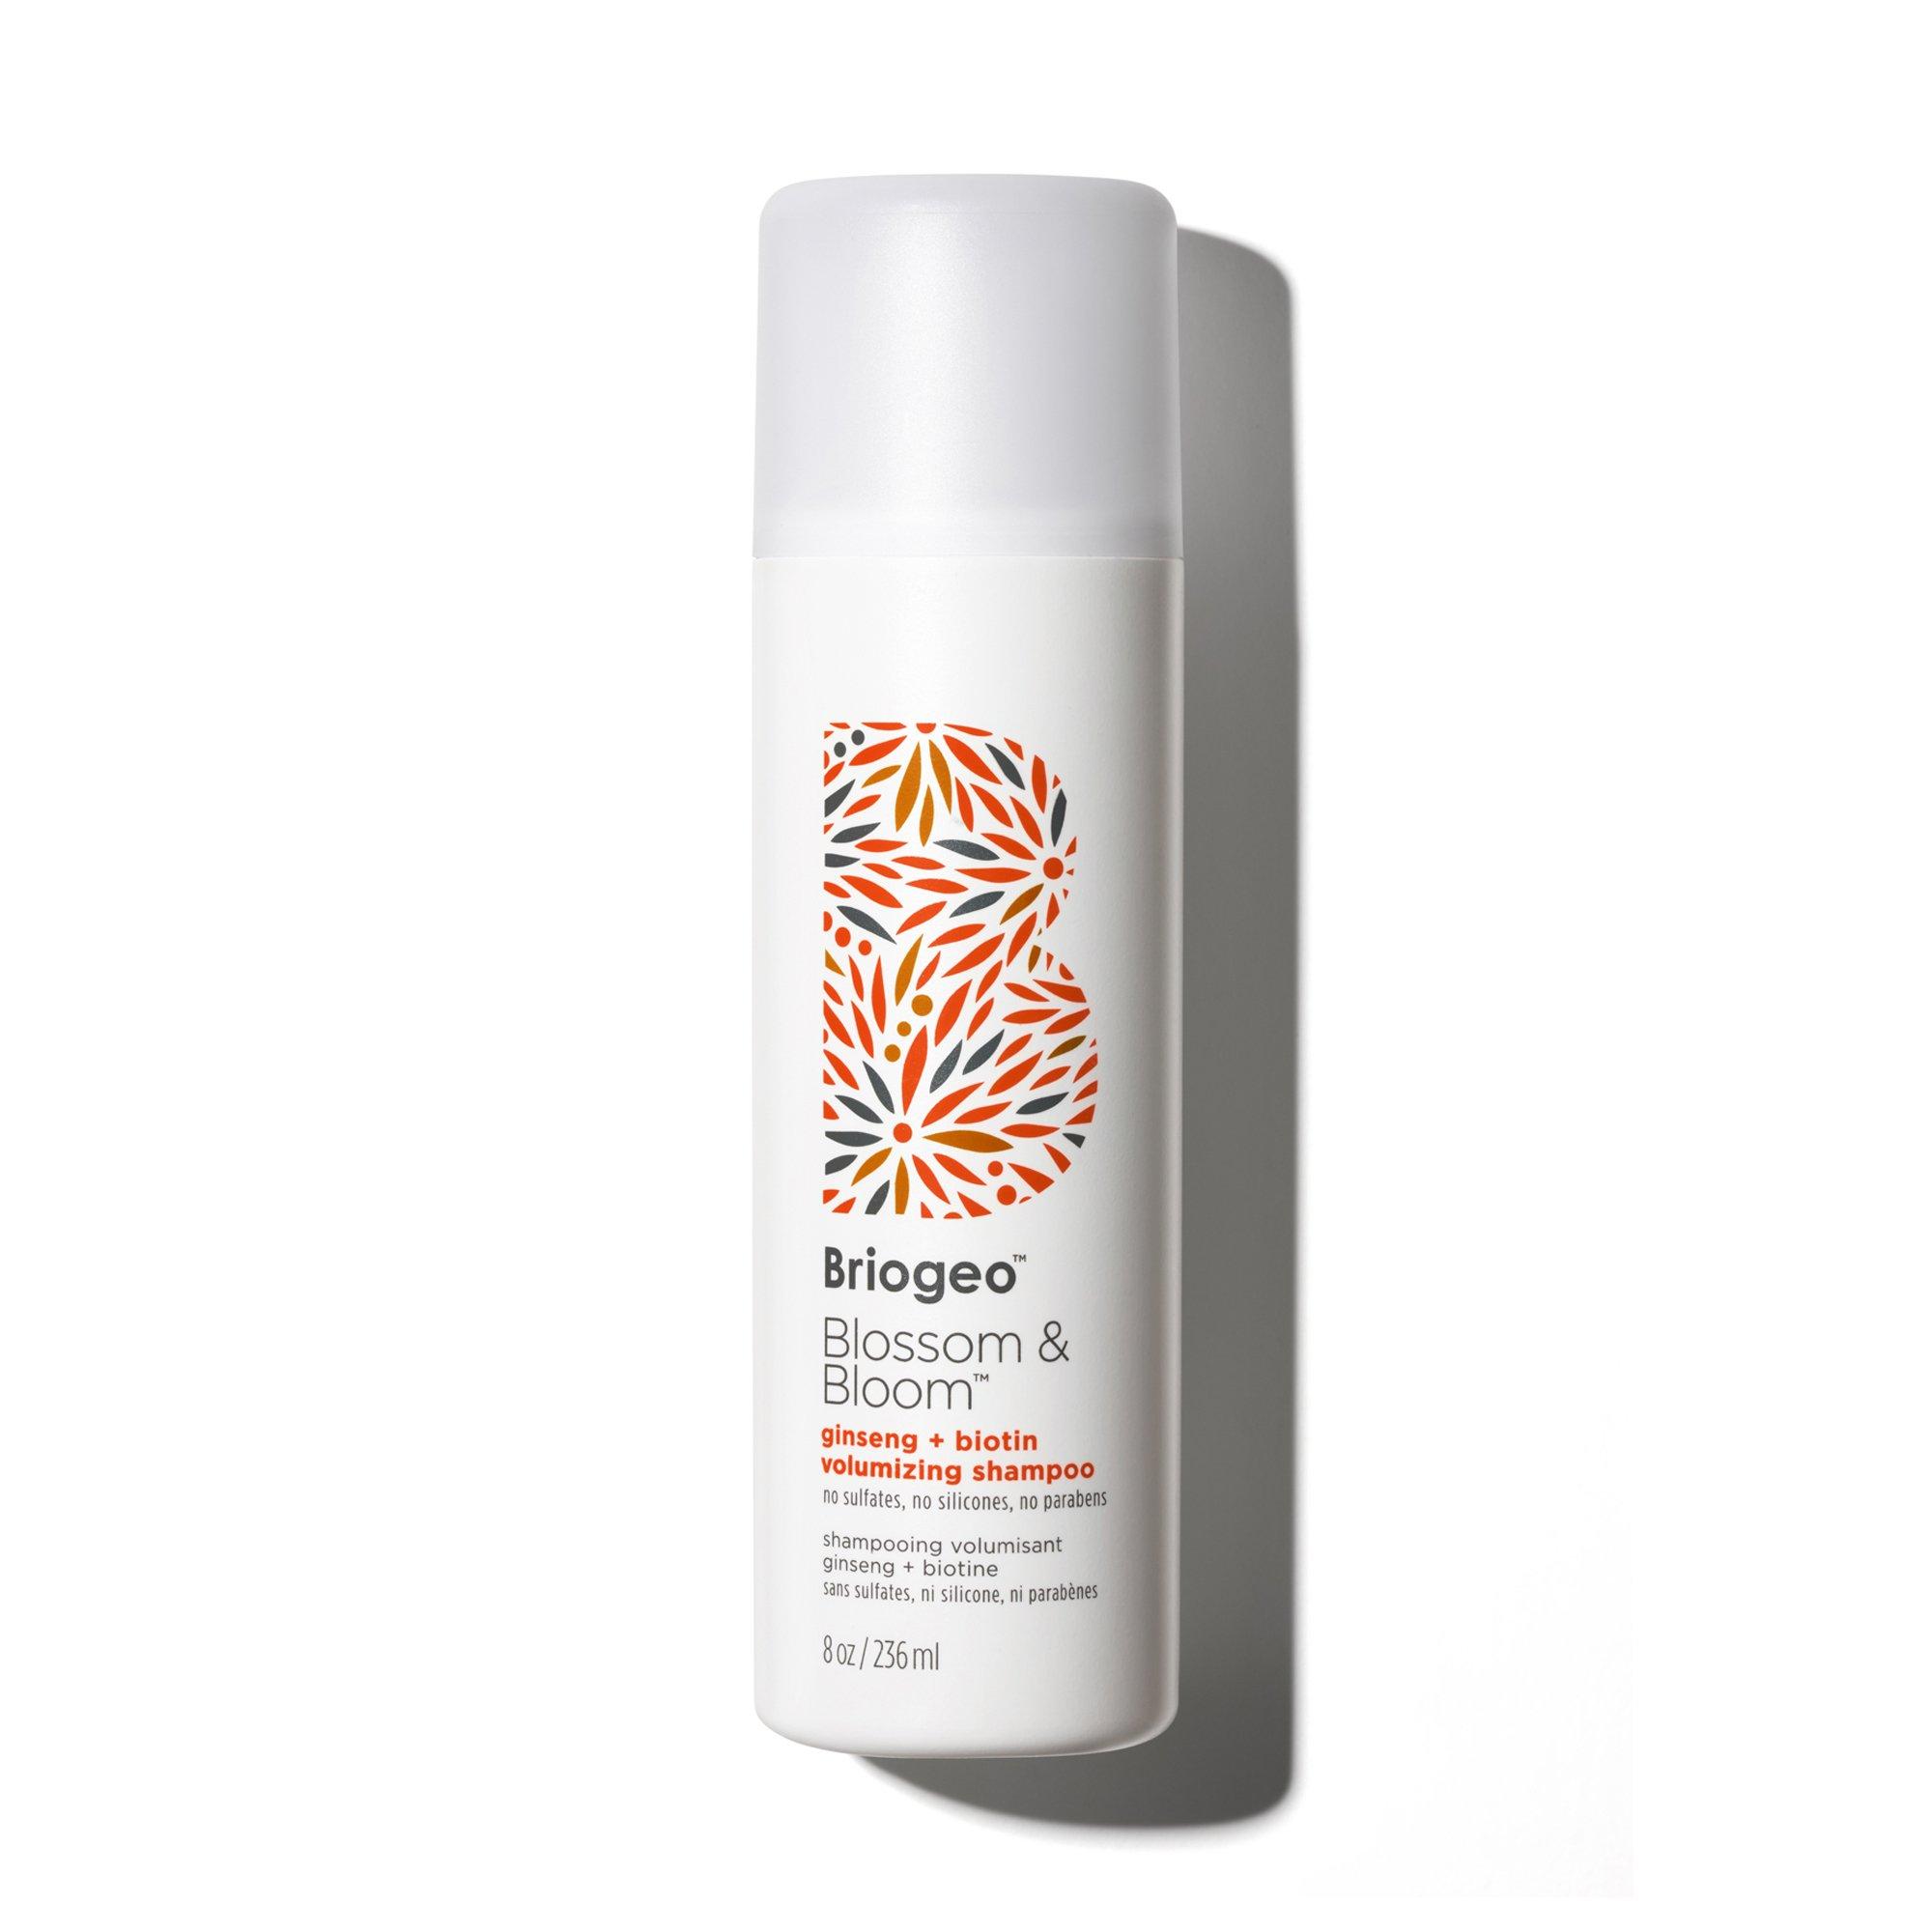 Image of Briogeo Blossom & Bloom Ginseng + Biotin volumizing shampoo